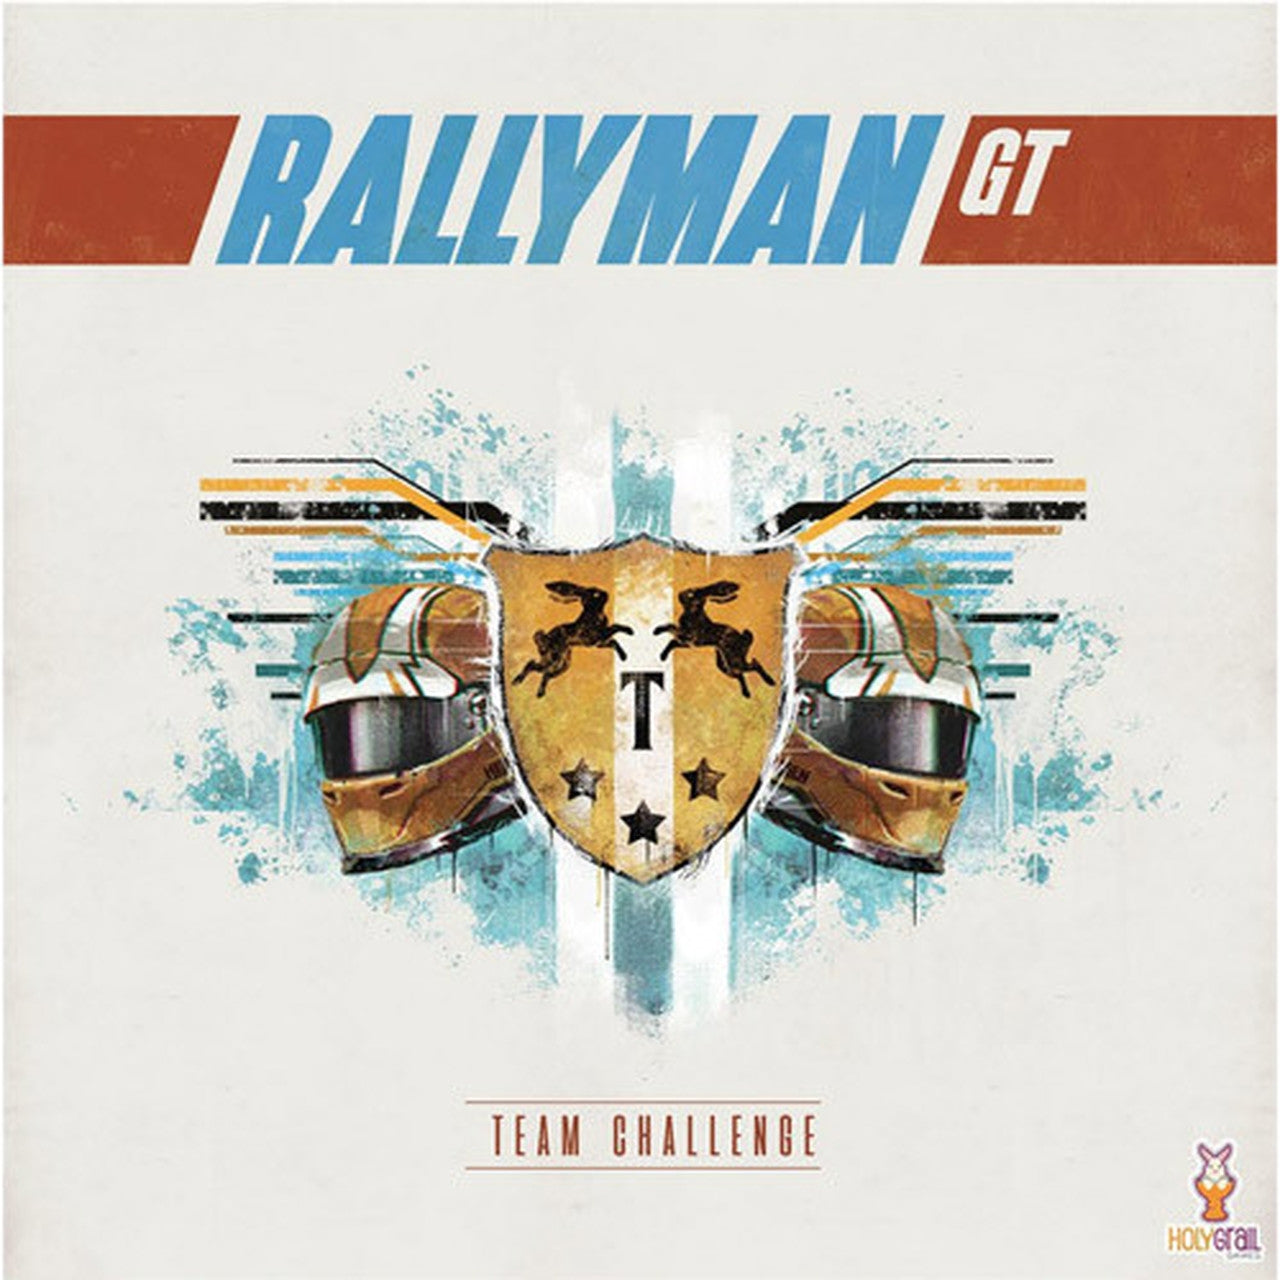 Team Challenge - Rallyman GT